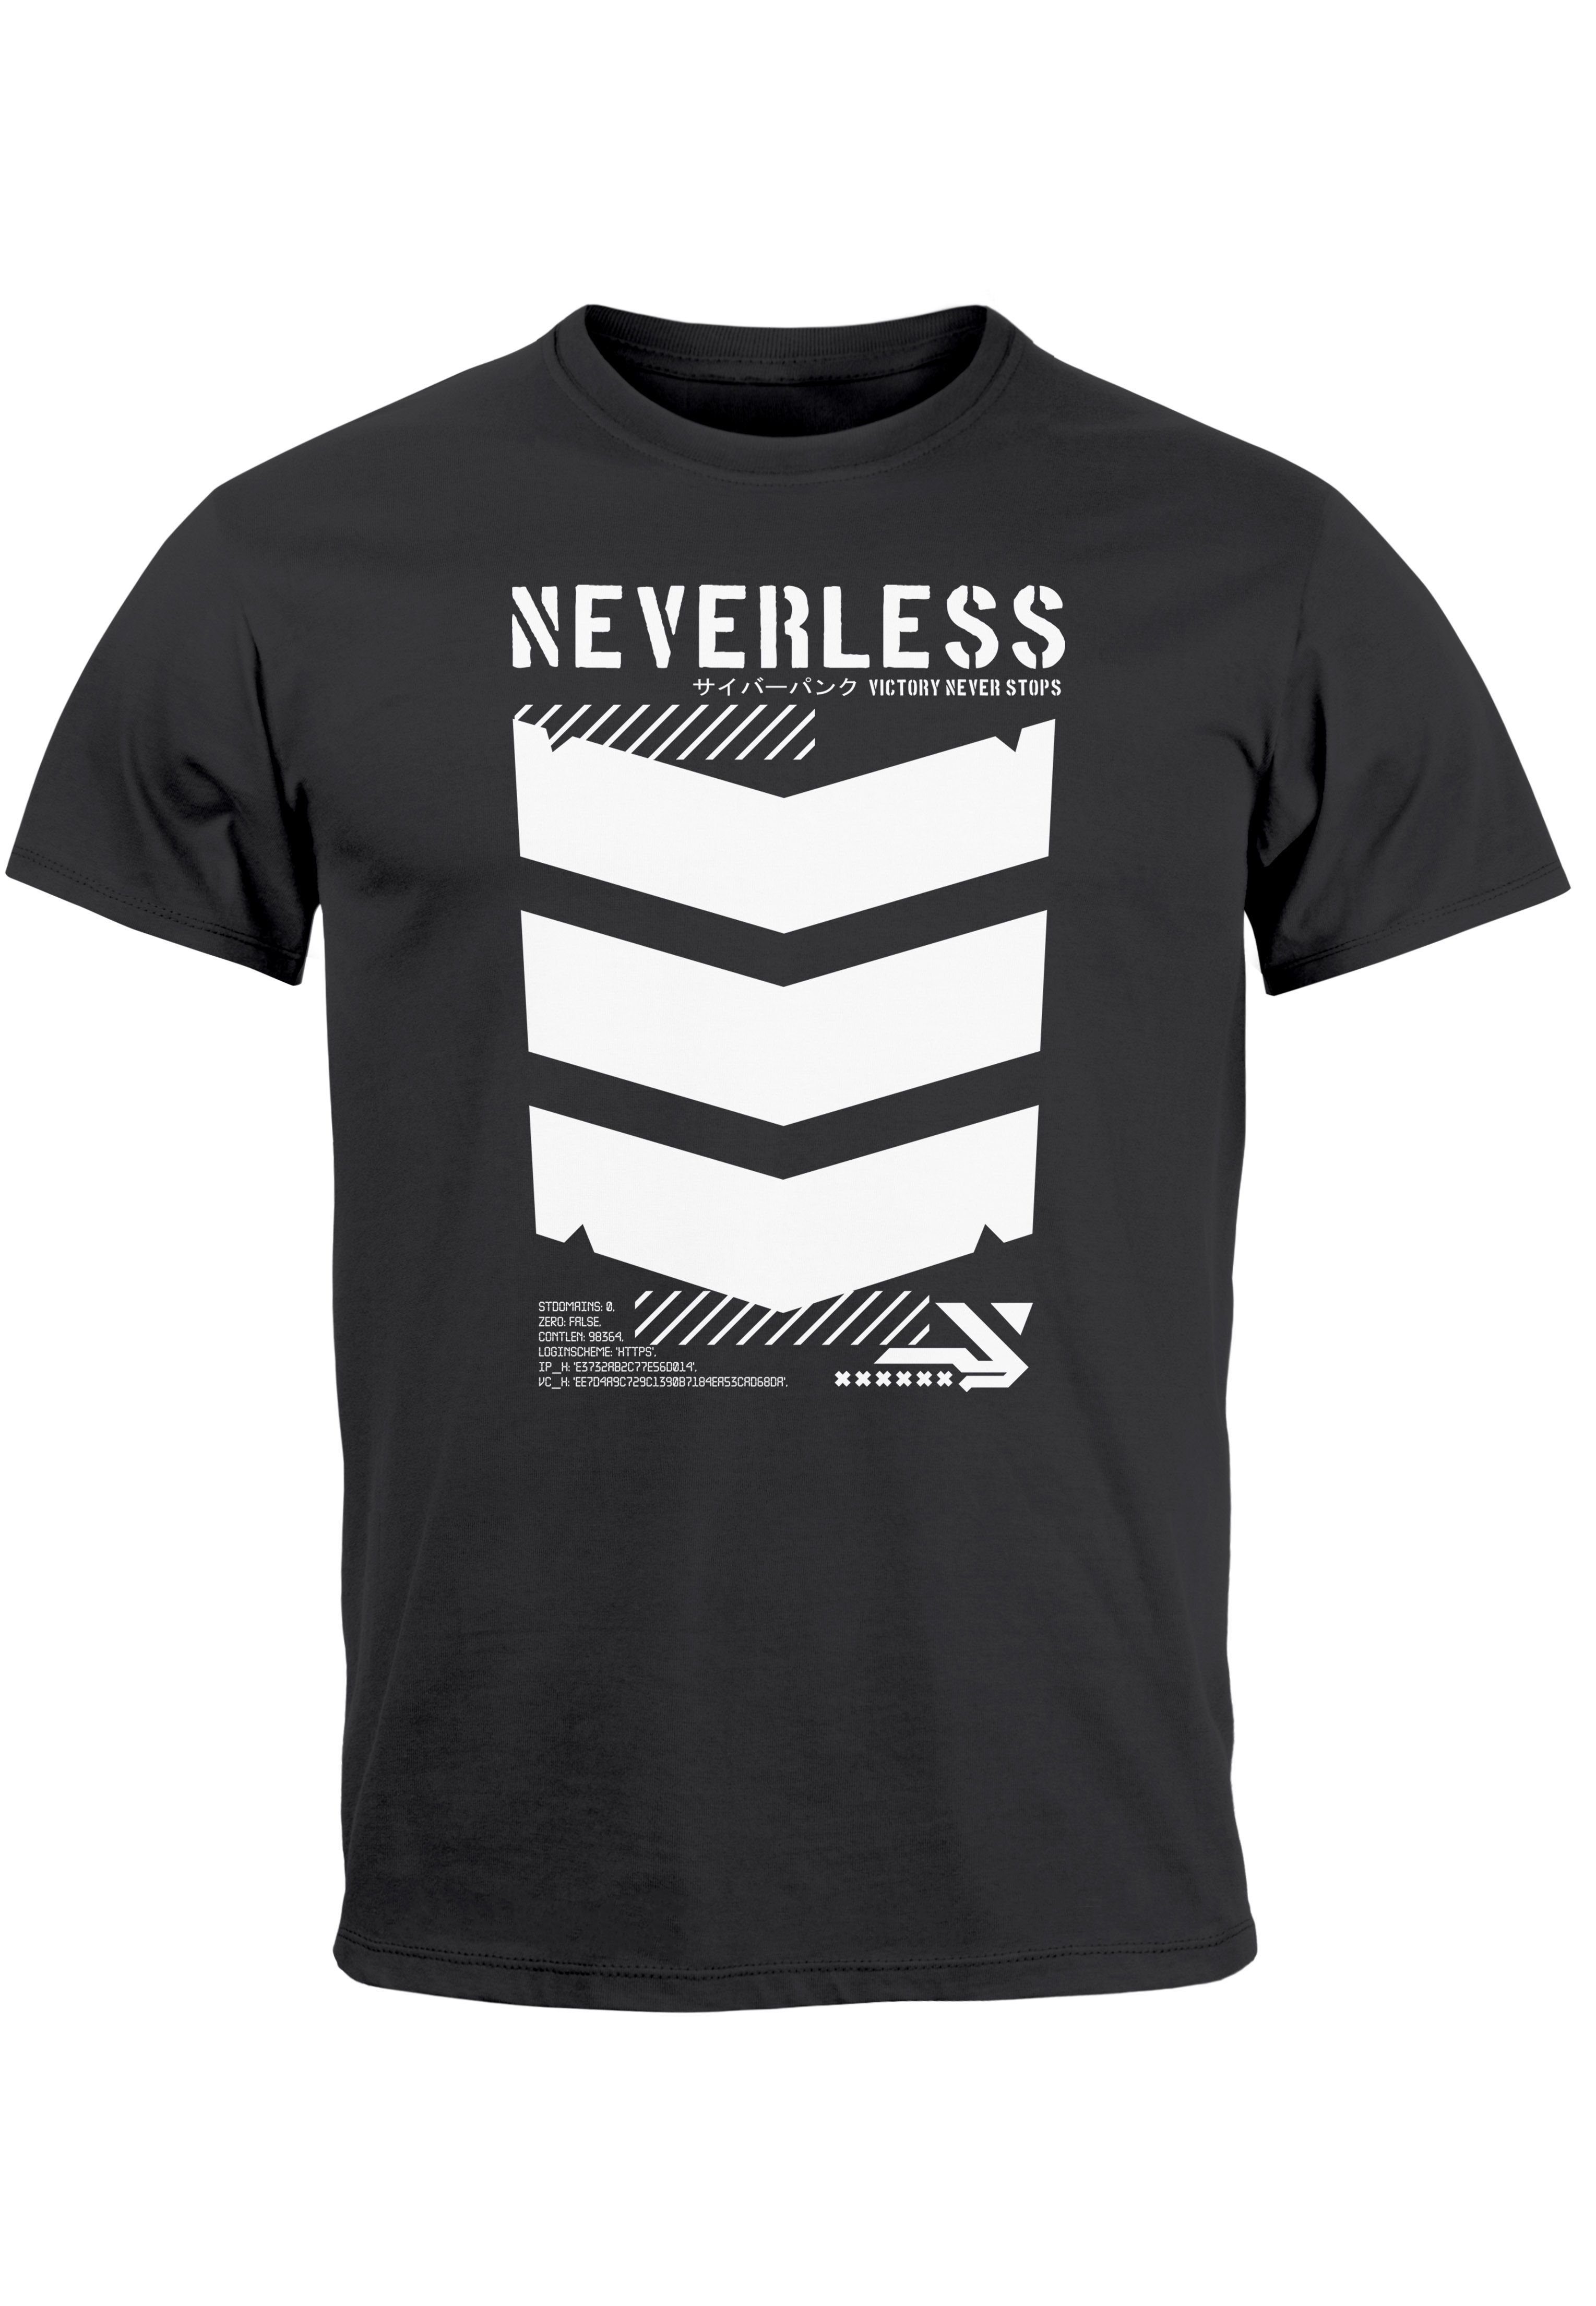 Neverless Print-Shirt Herren T-Shirt Techwear Trend Motive Japanese Streetstyle Military Fas mit Print anthrazit